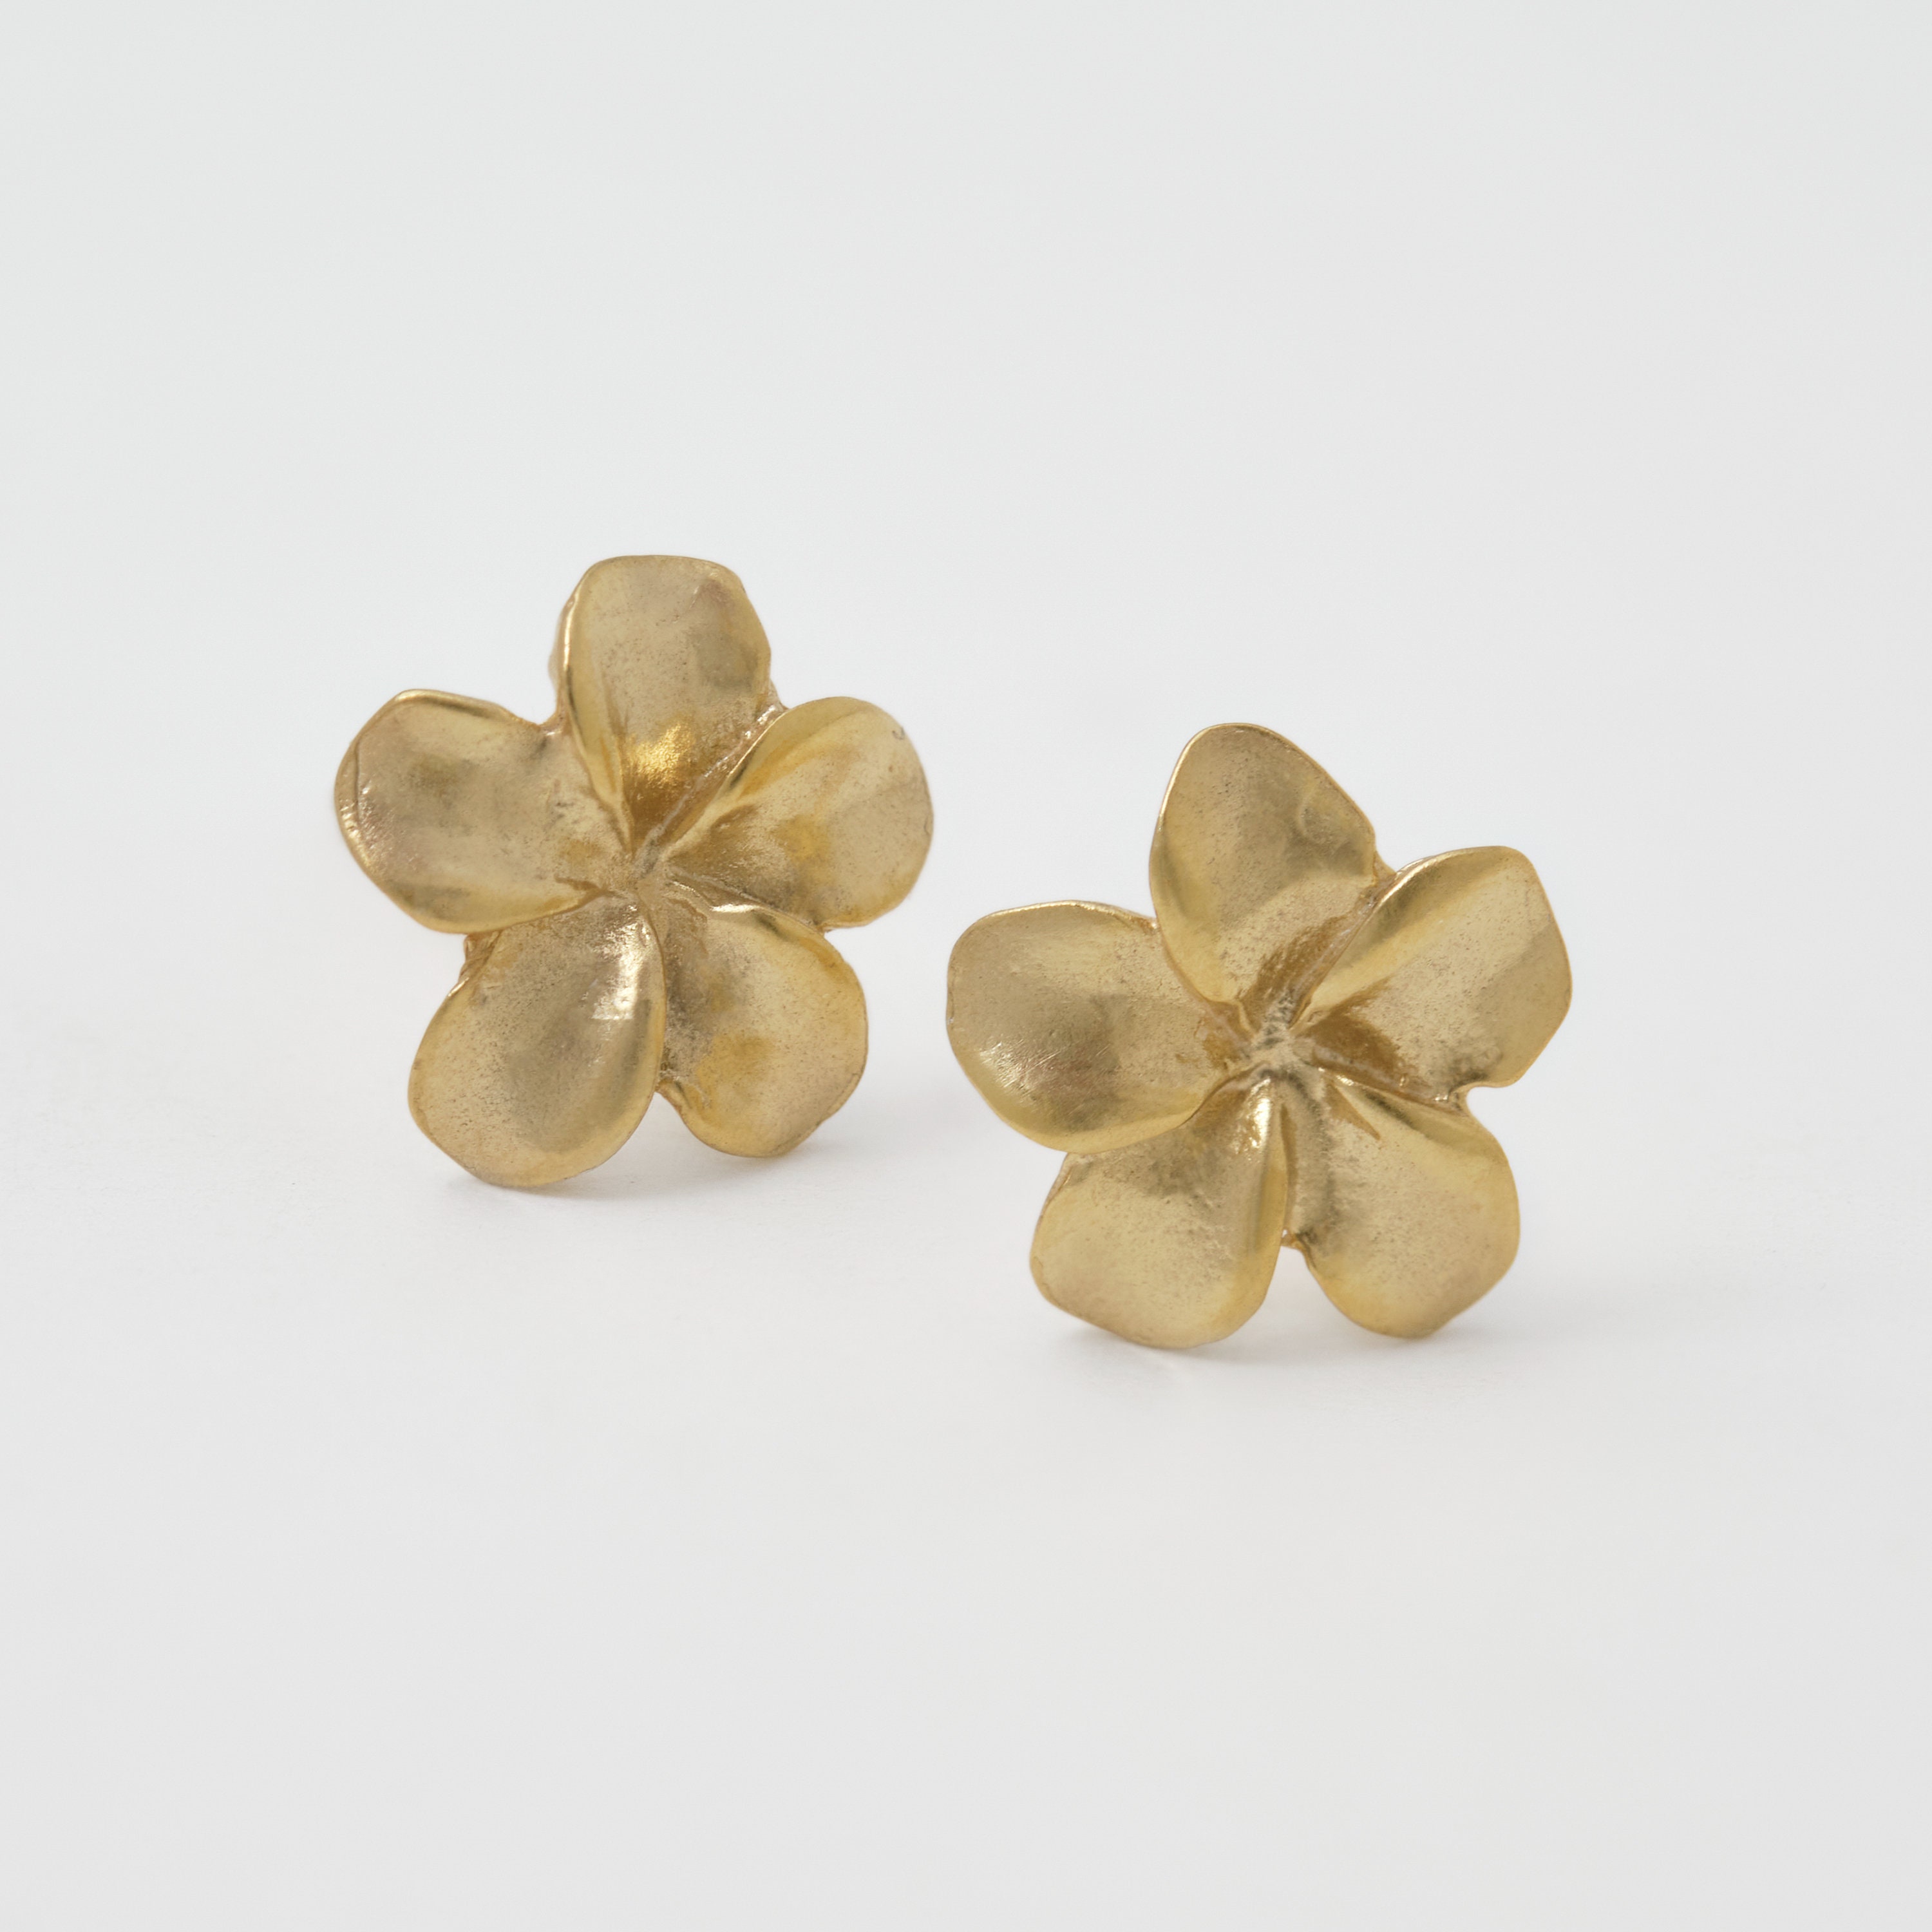 Minimal Floral Symbol Frangipani Earrings in 14K Solid Gold | Etsy